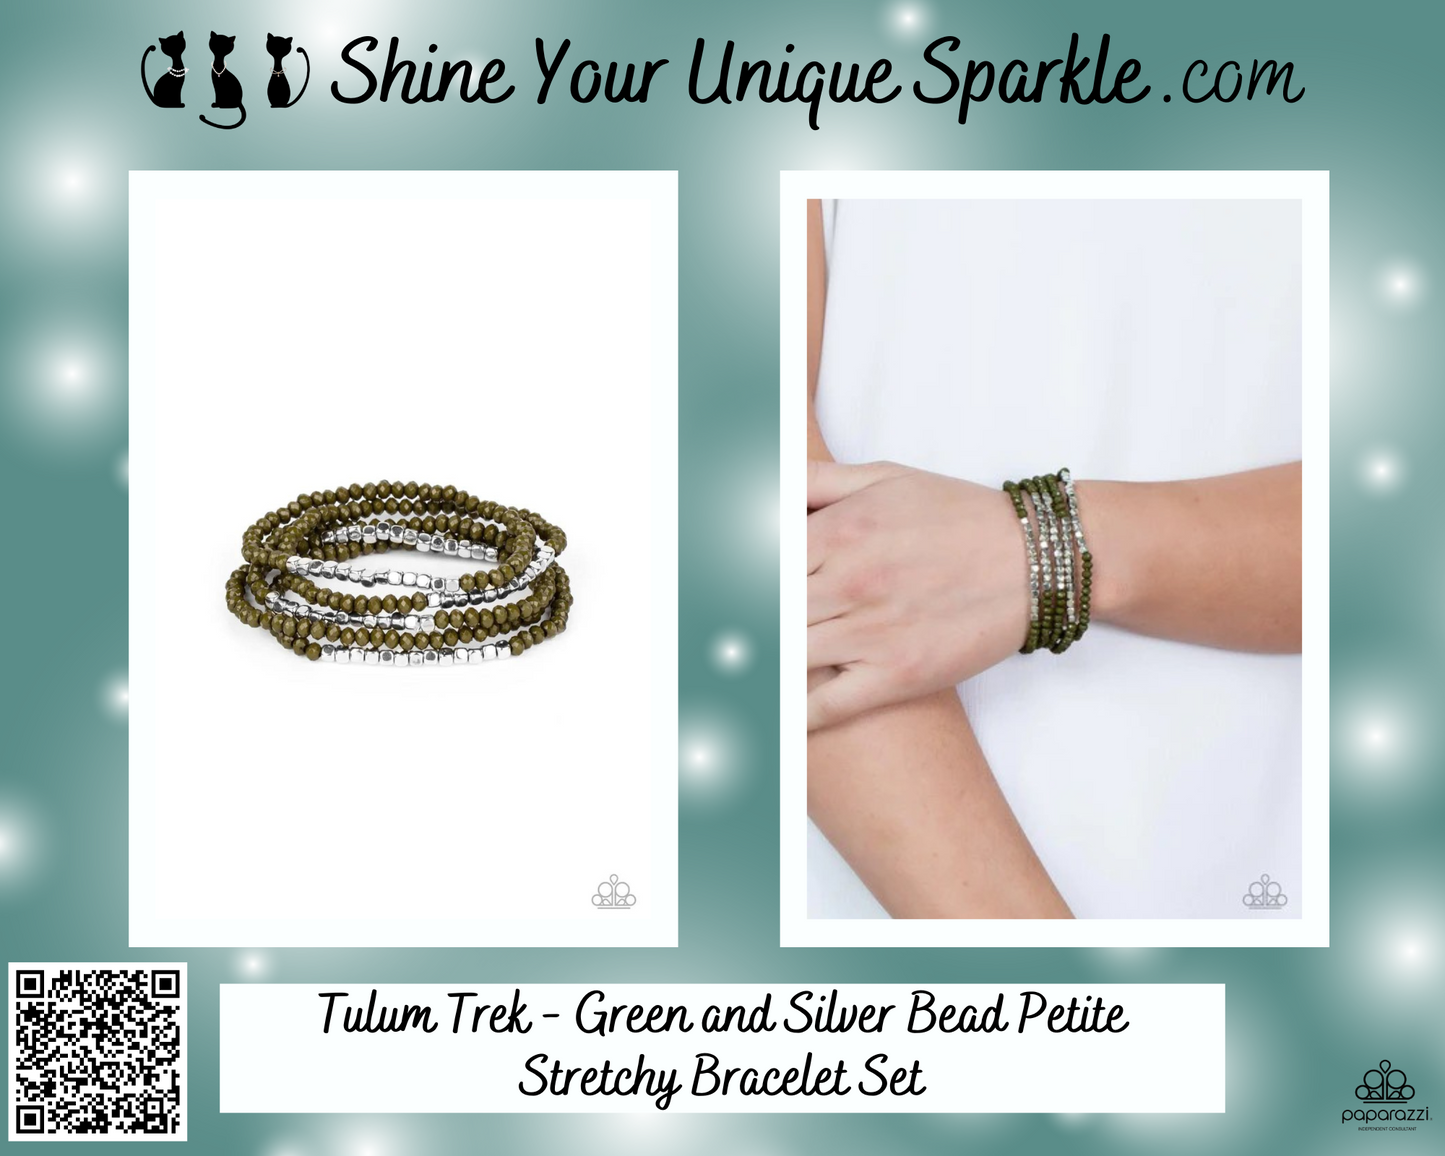 Tulum Trek - Green and Silver Bead Petite Stretchy Bracelet Set